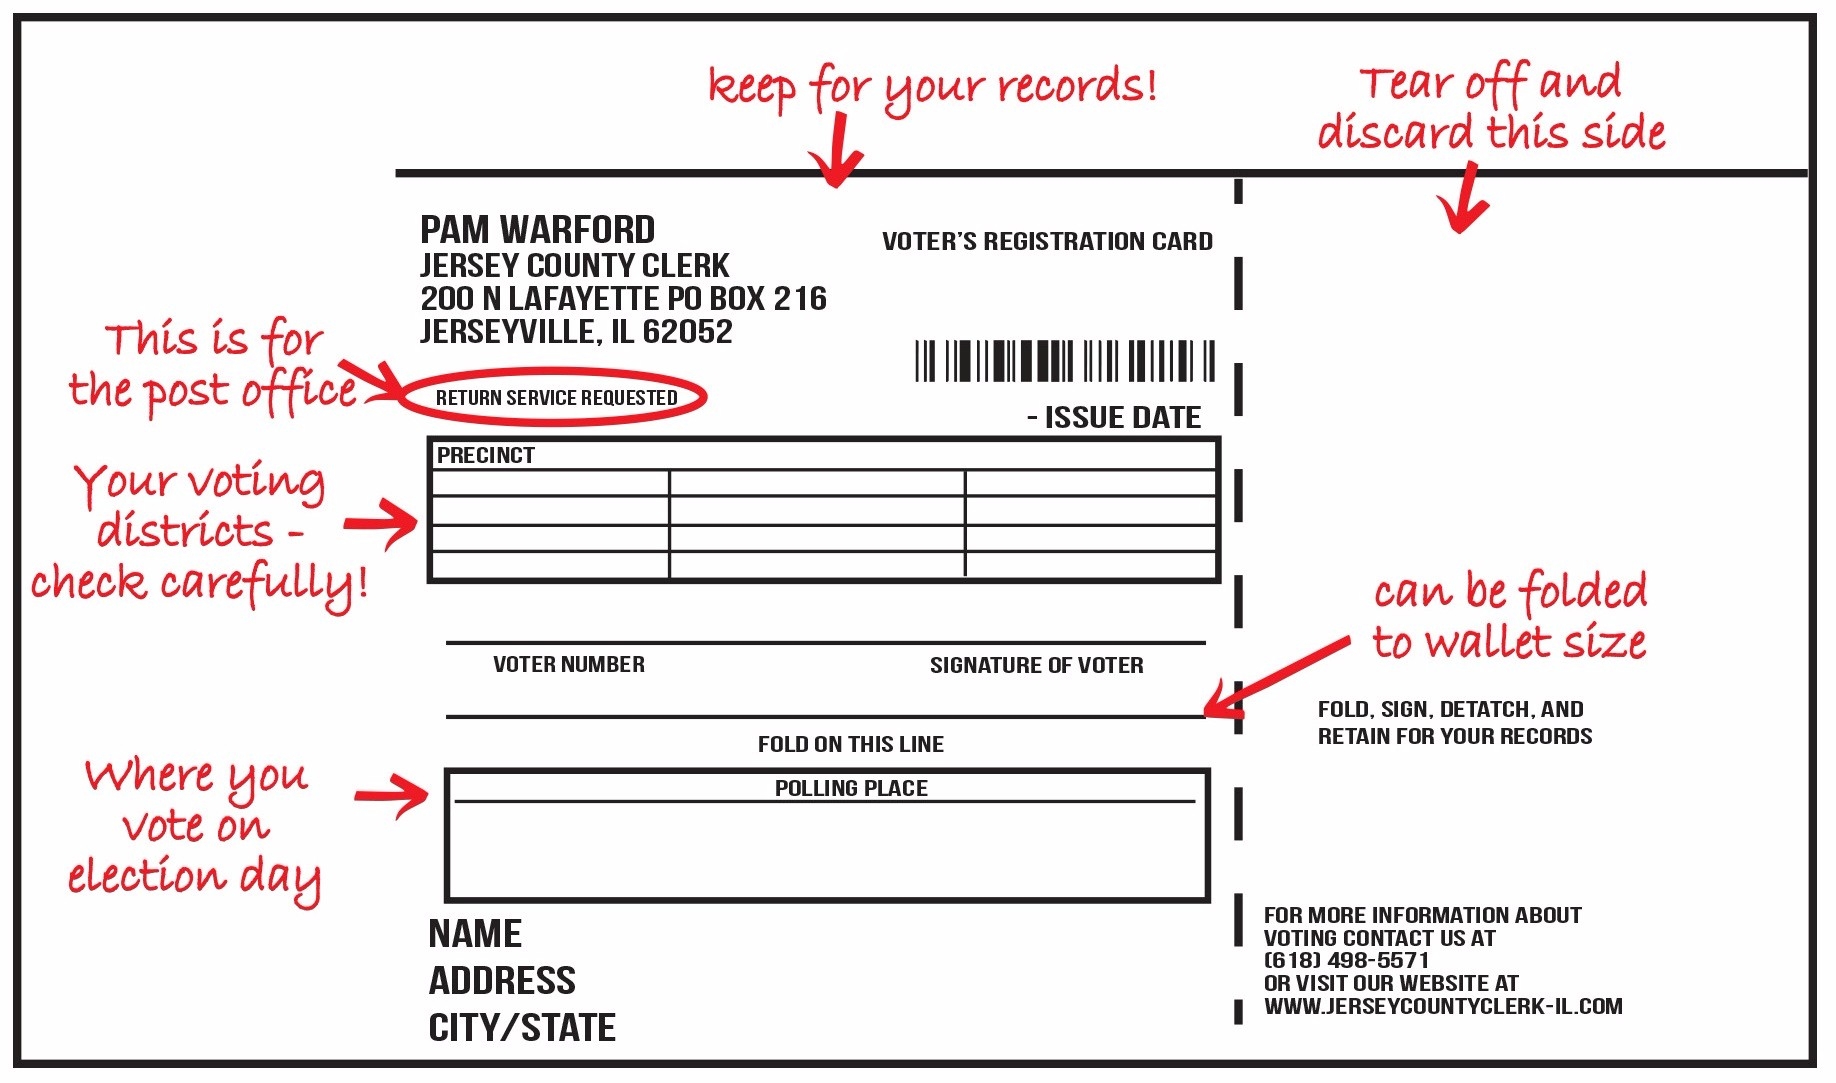 Voter Registration Card | Jersey County Clerk